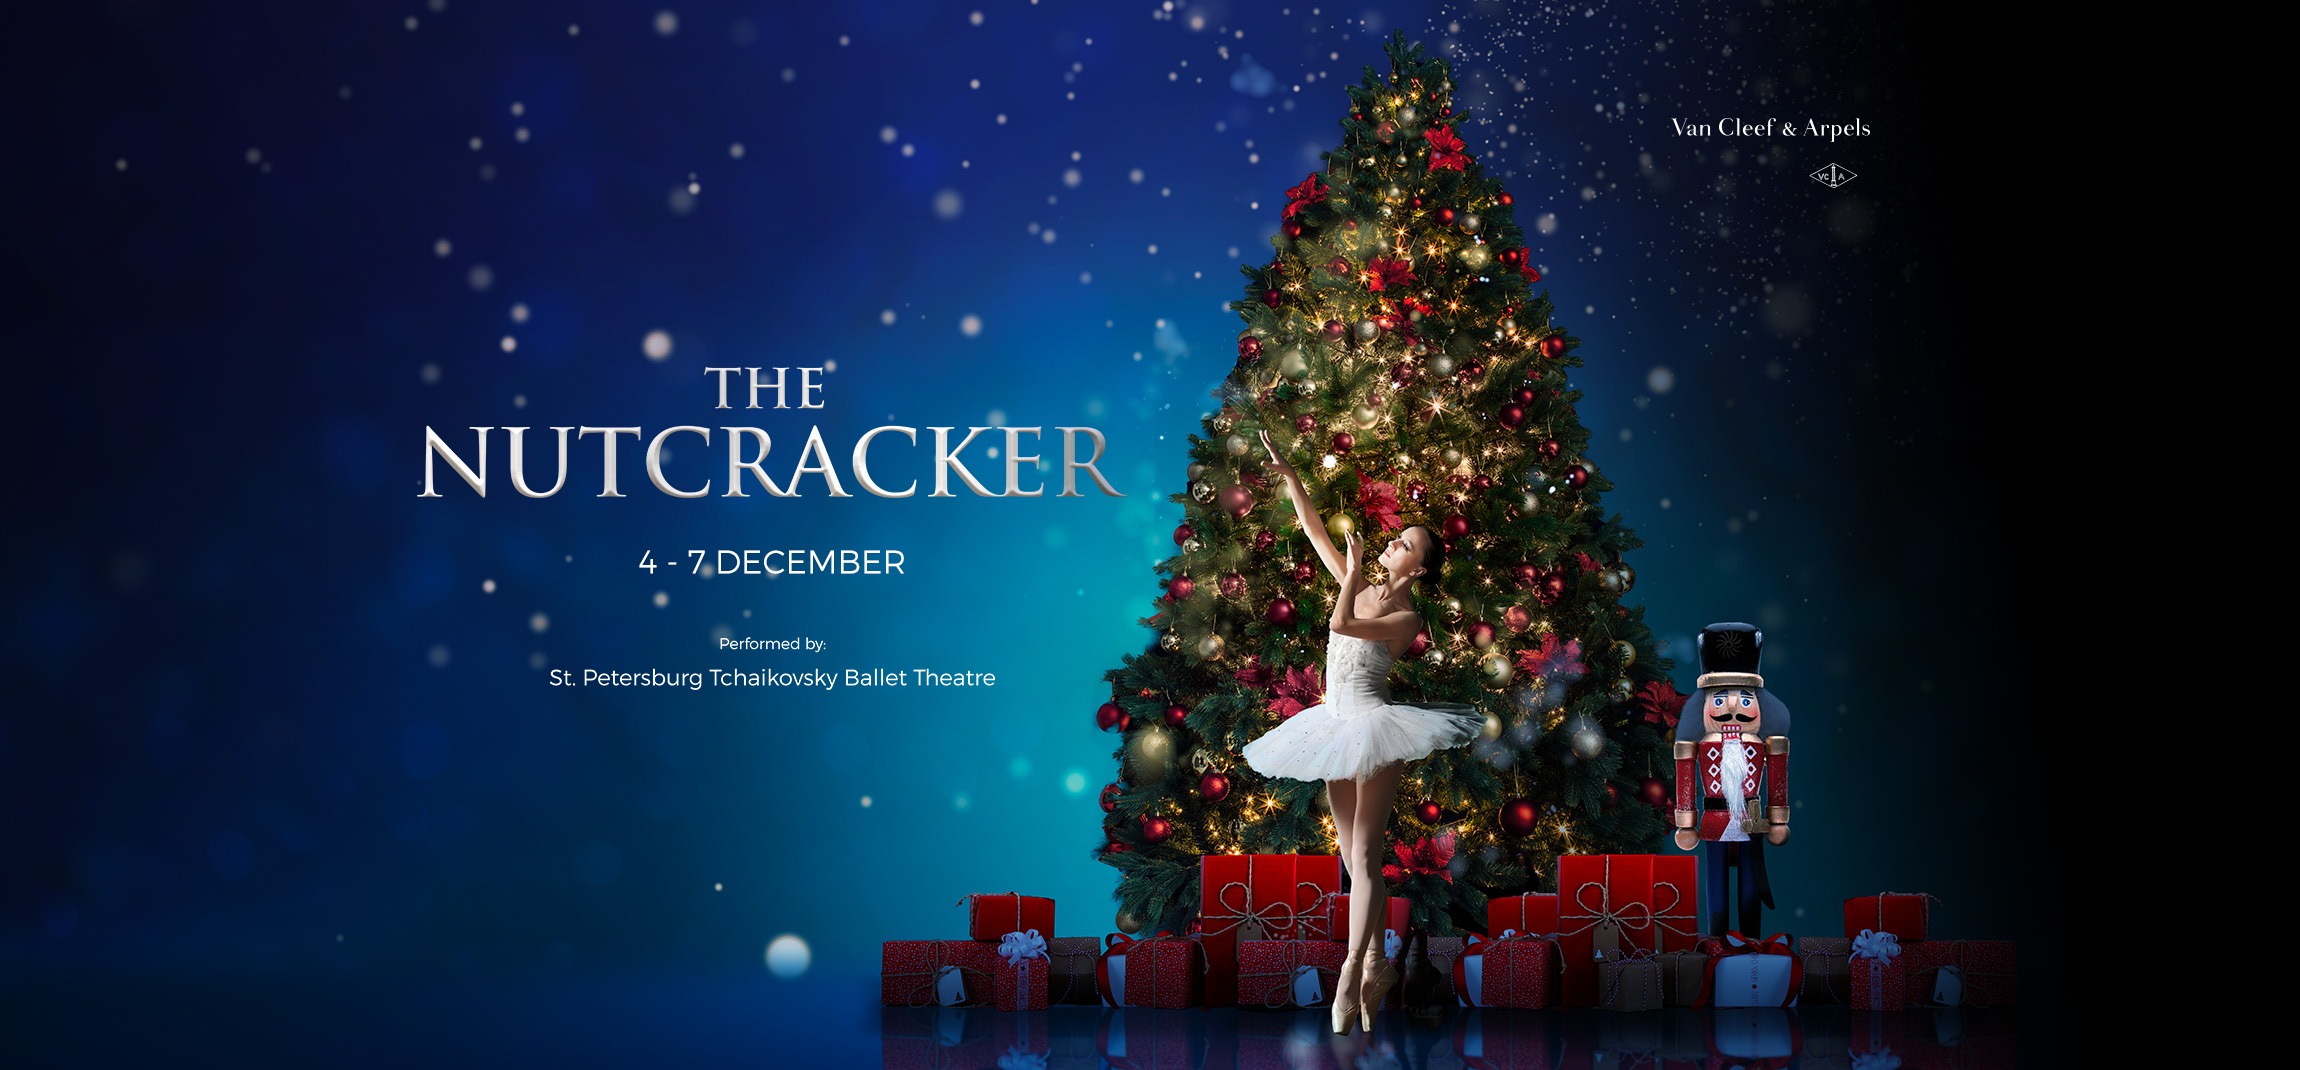 The Nutcracker at the Dubai Opera - Coming Soon in UAE